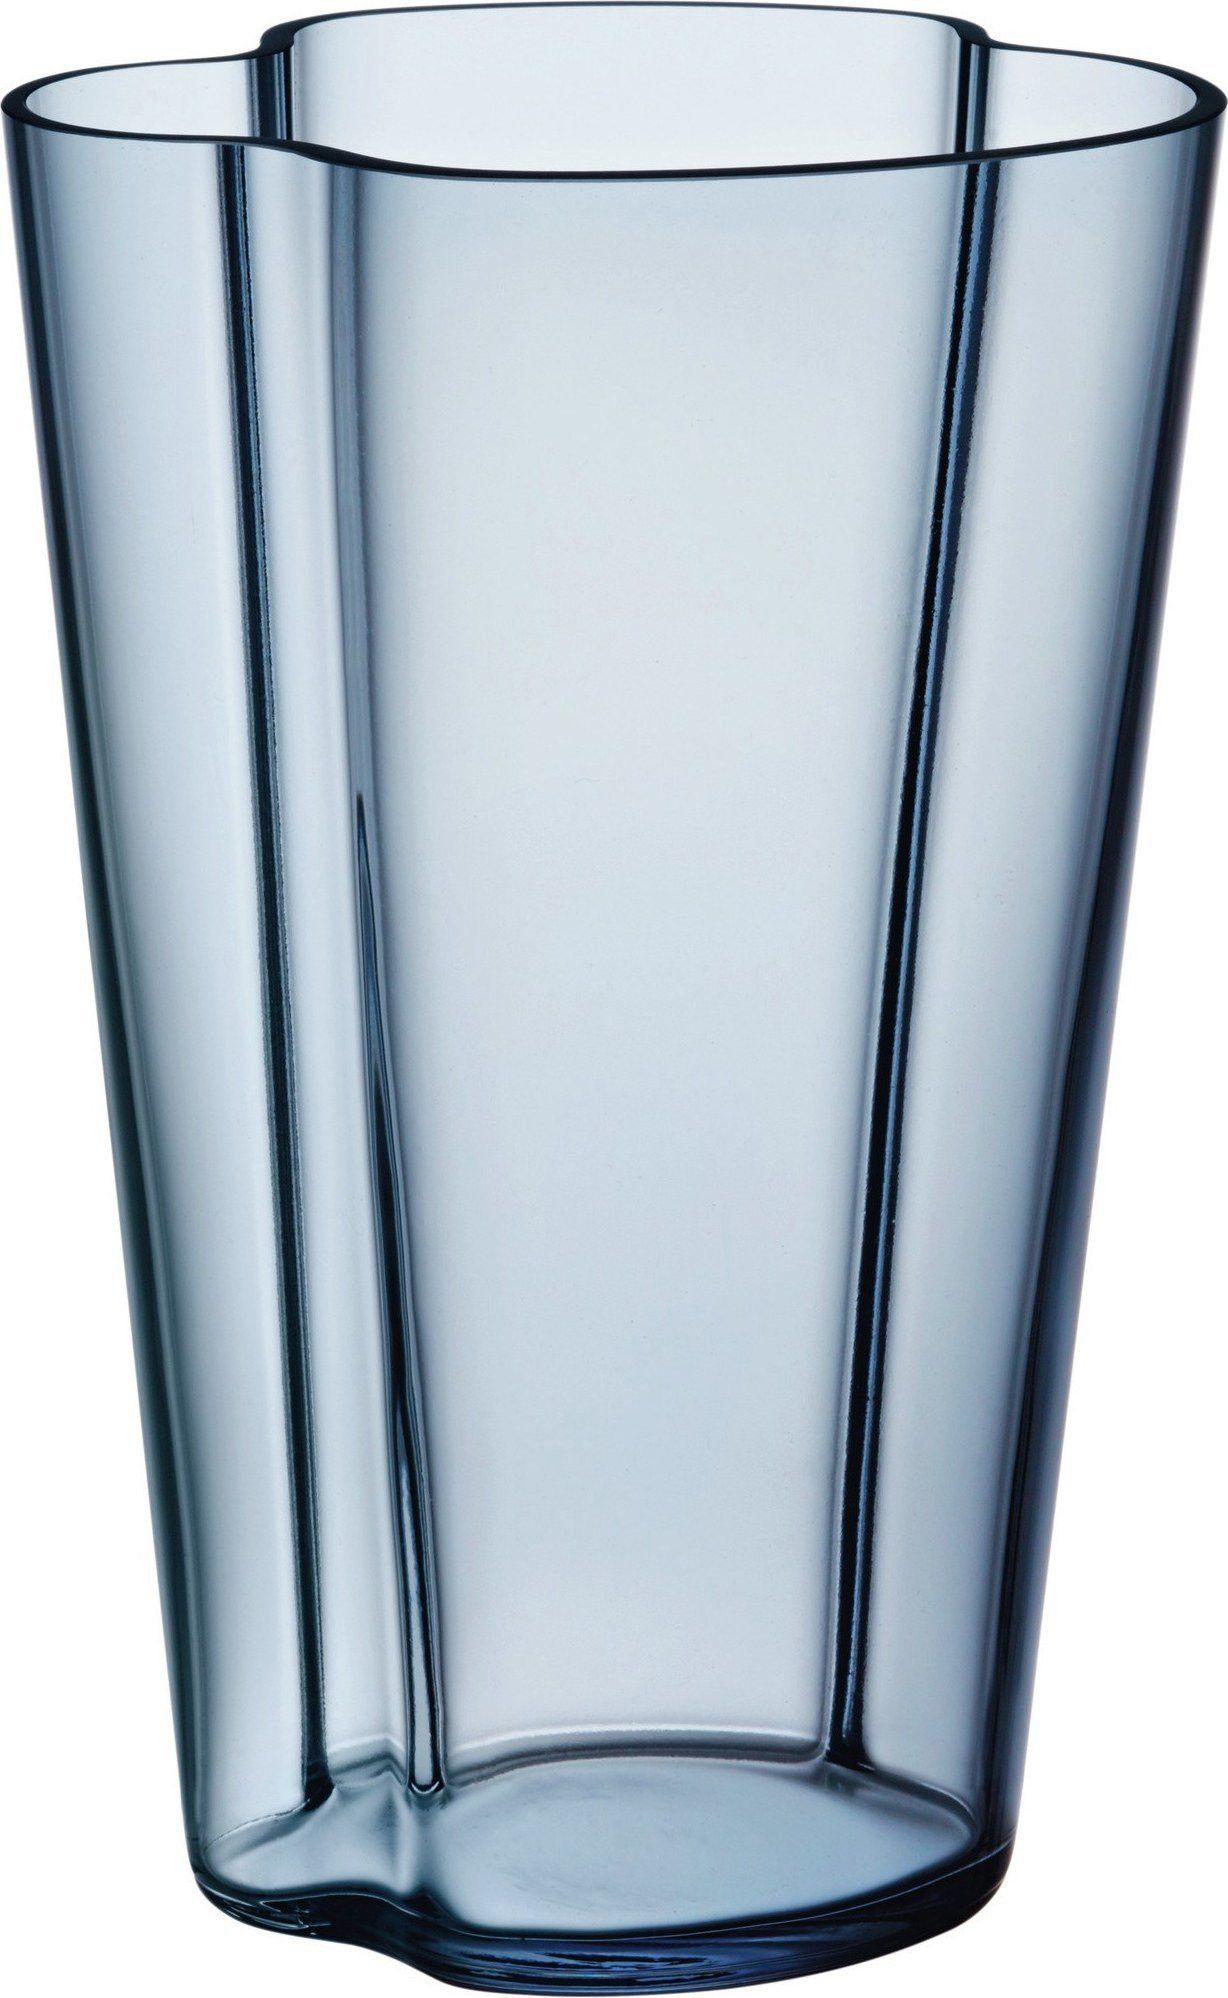 iittala aalto vase of wazon aalto 22 cm iittala 1024738 fabryka form with iittala wazon aalto 22 cm rain